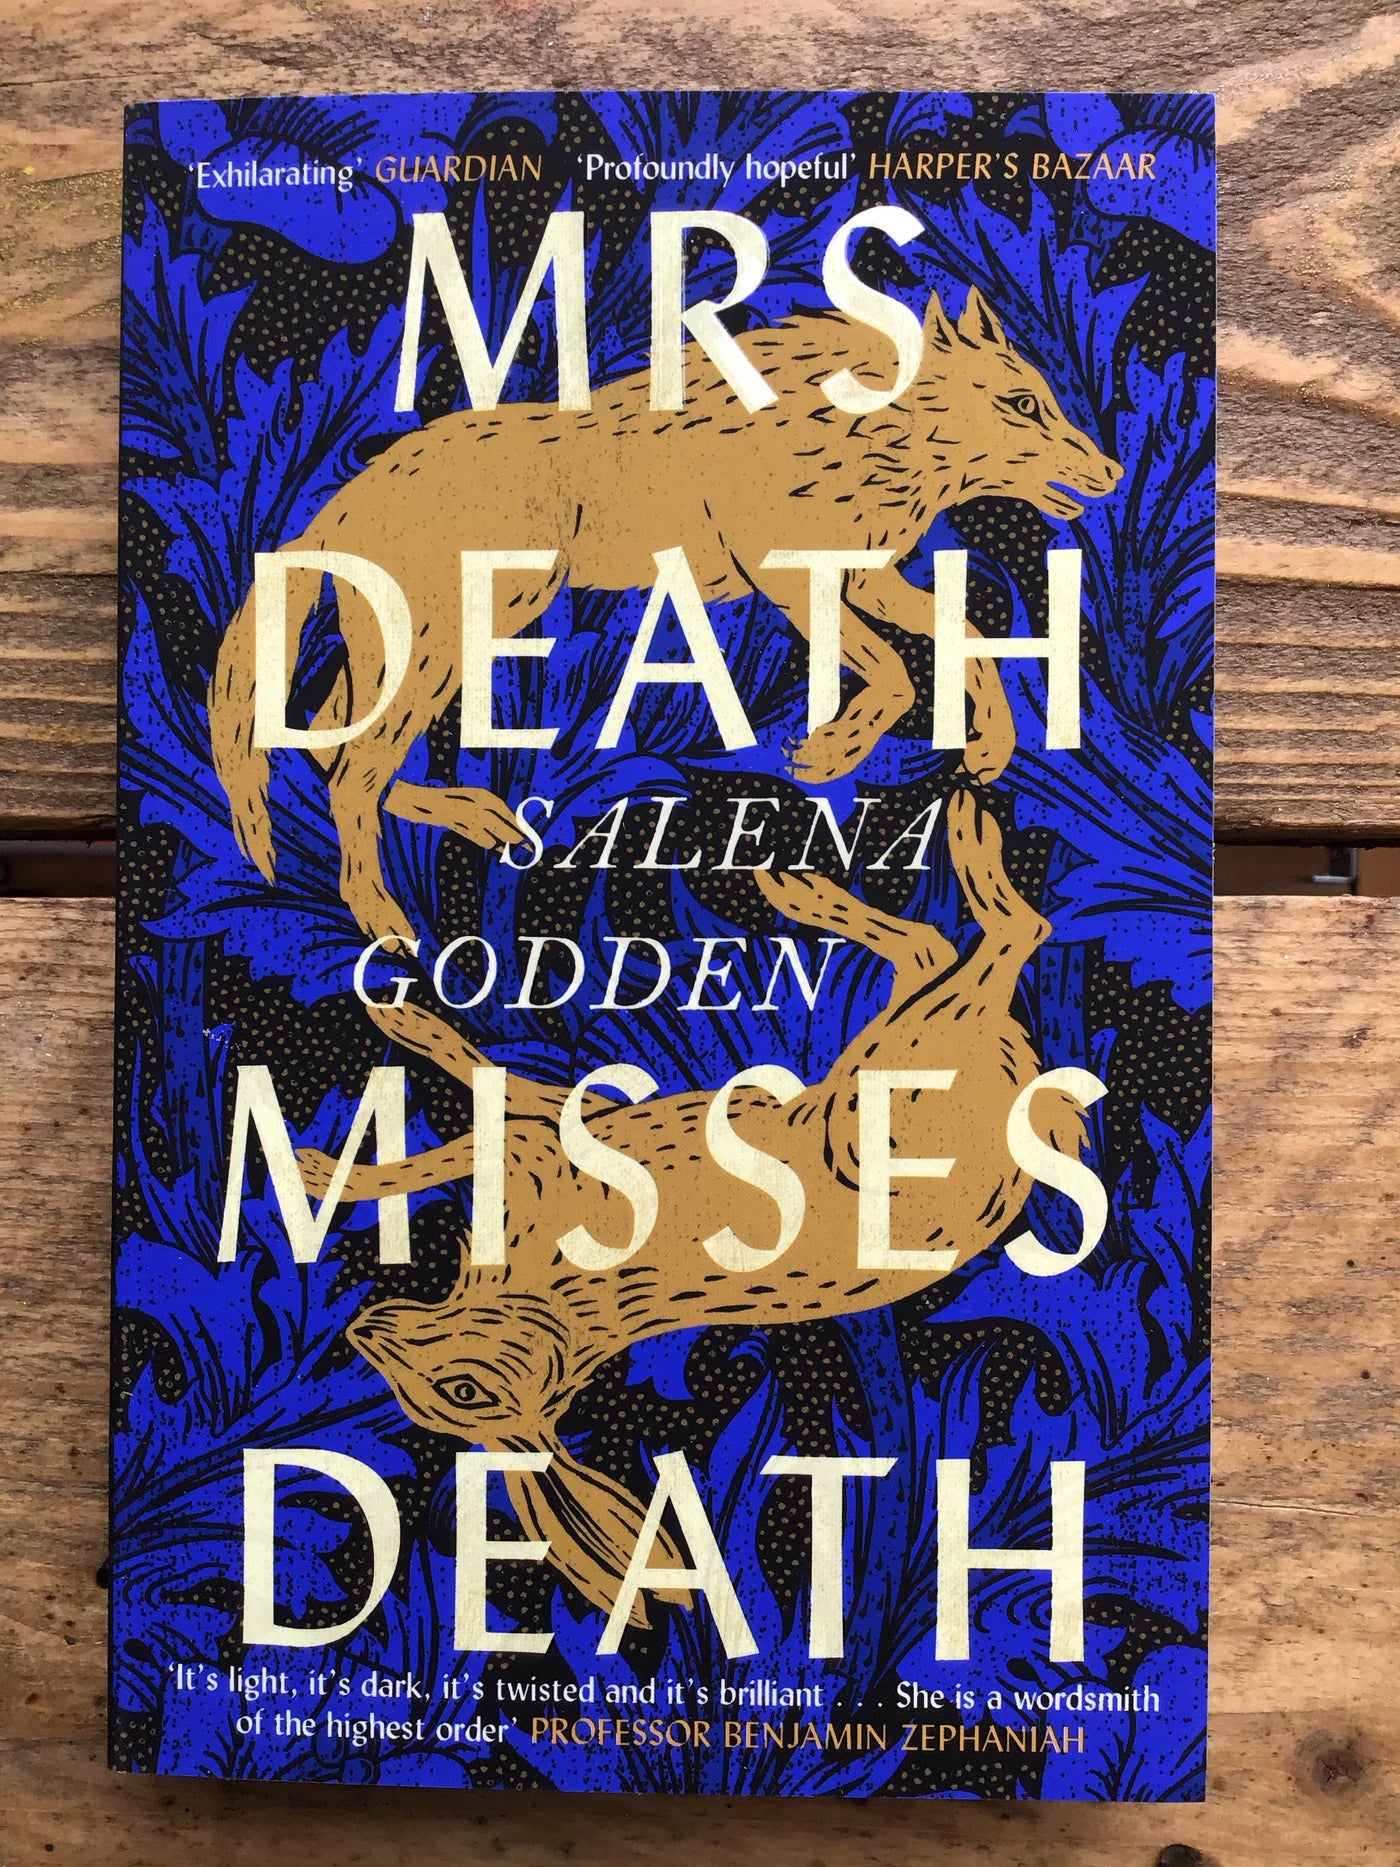 Mrs Death Misses Death